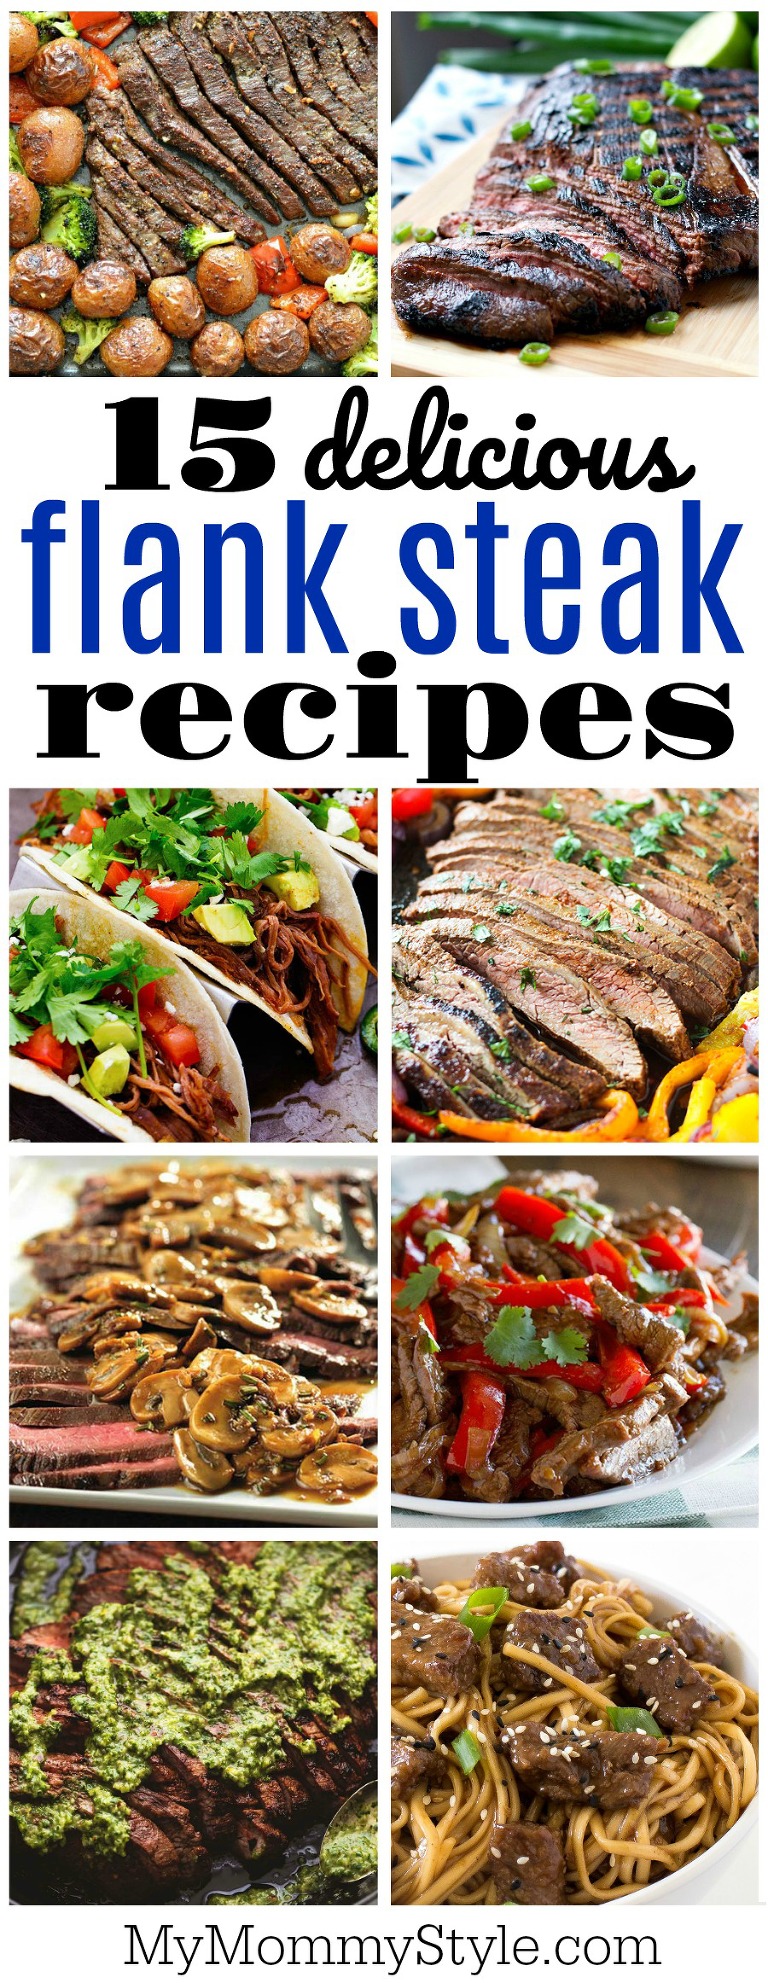 15 delicious flank steak recipes